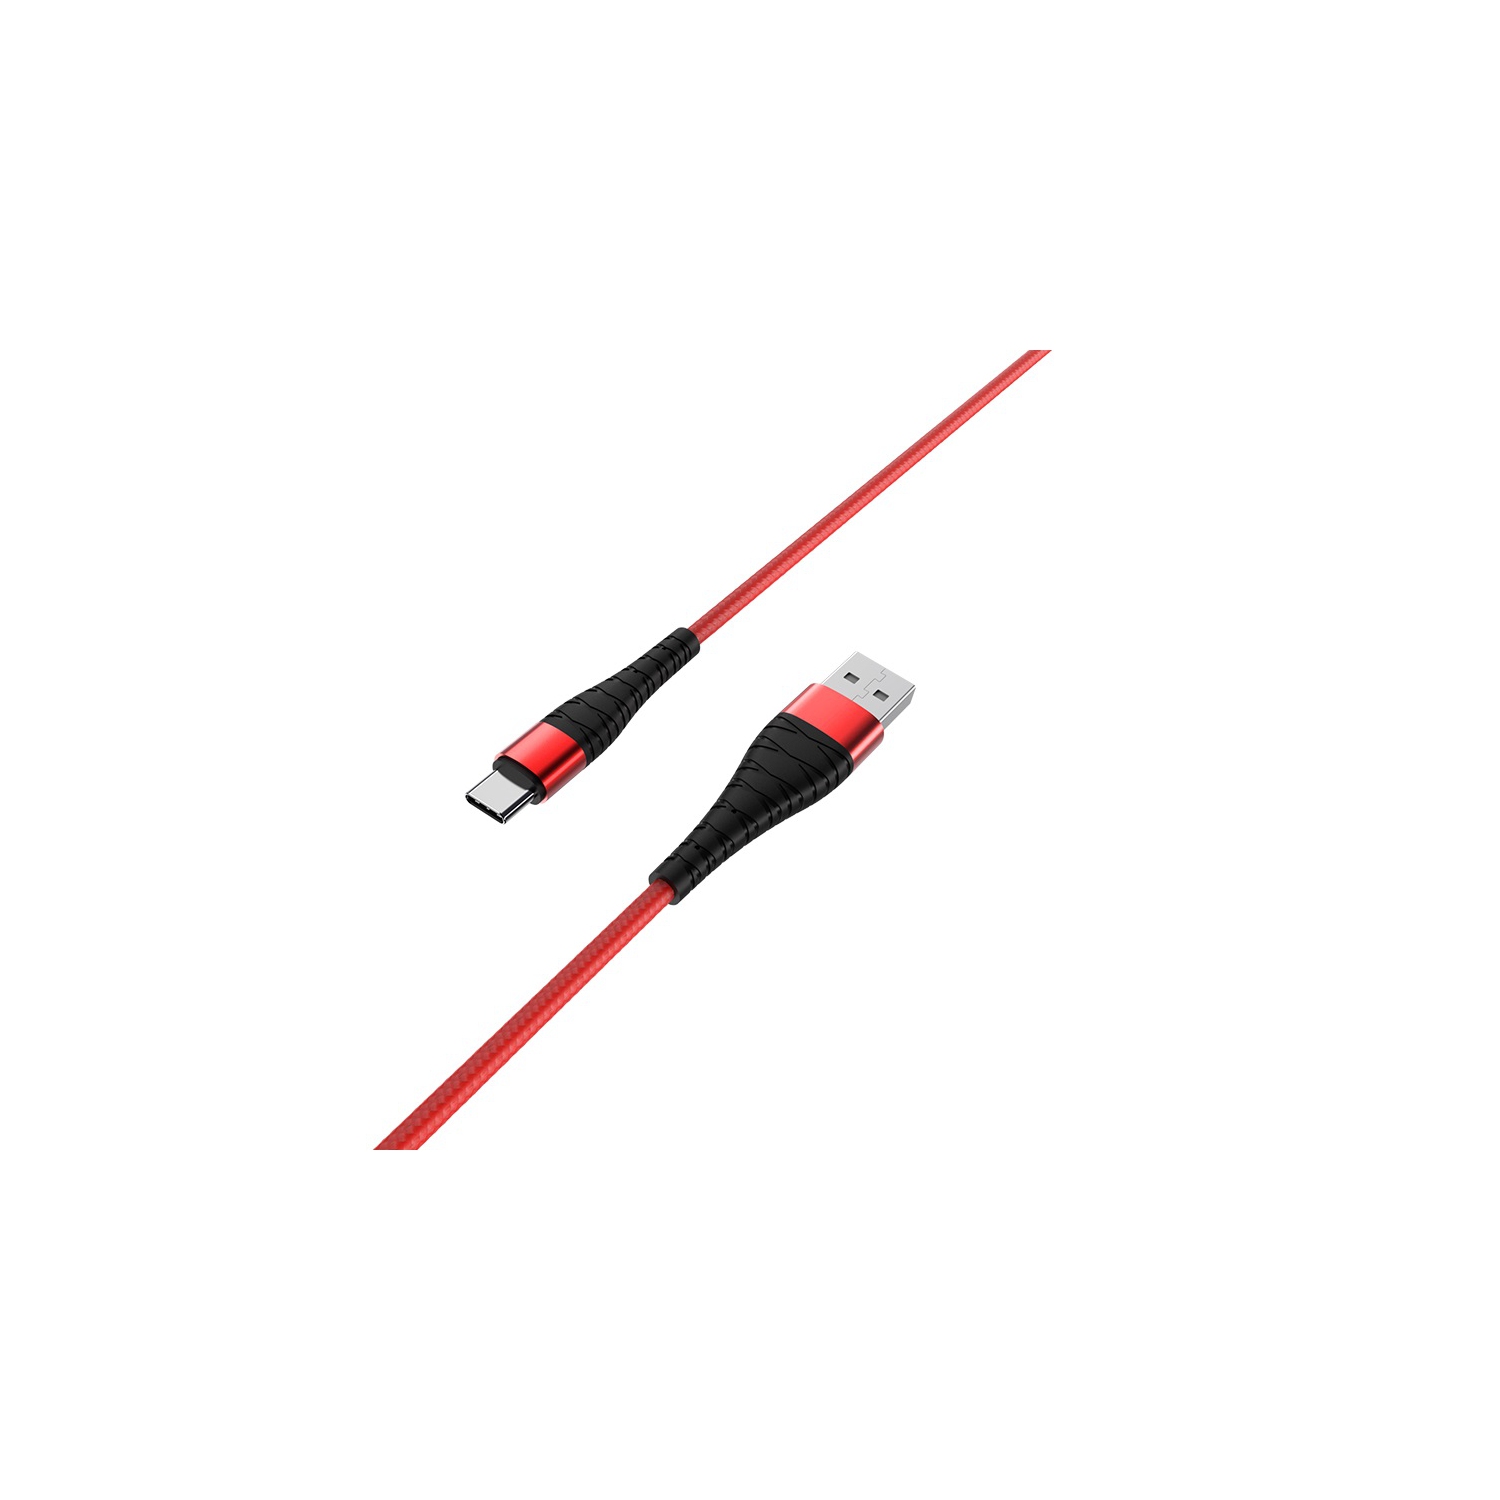 【3 Packs】 1M/3.3Ft Heavy Duty Nylon Braid USB Type C Fast Charging Data Cable Cord for Samsung Google LG Motorola Phones, Red